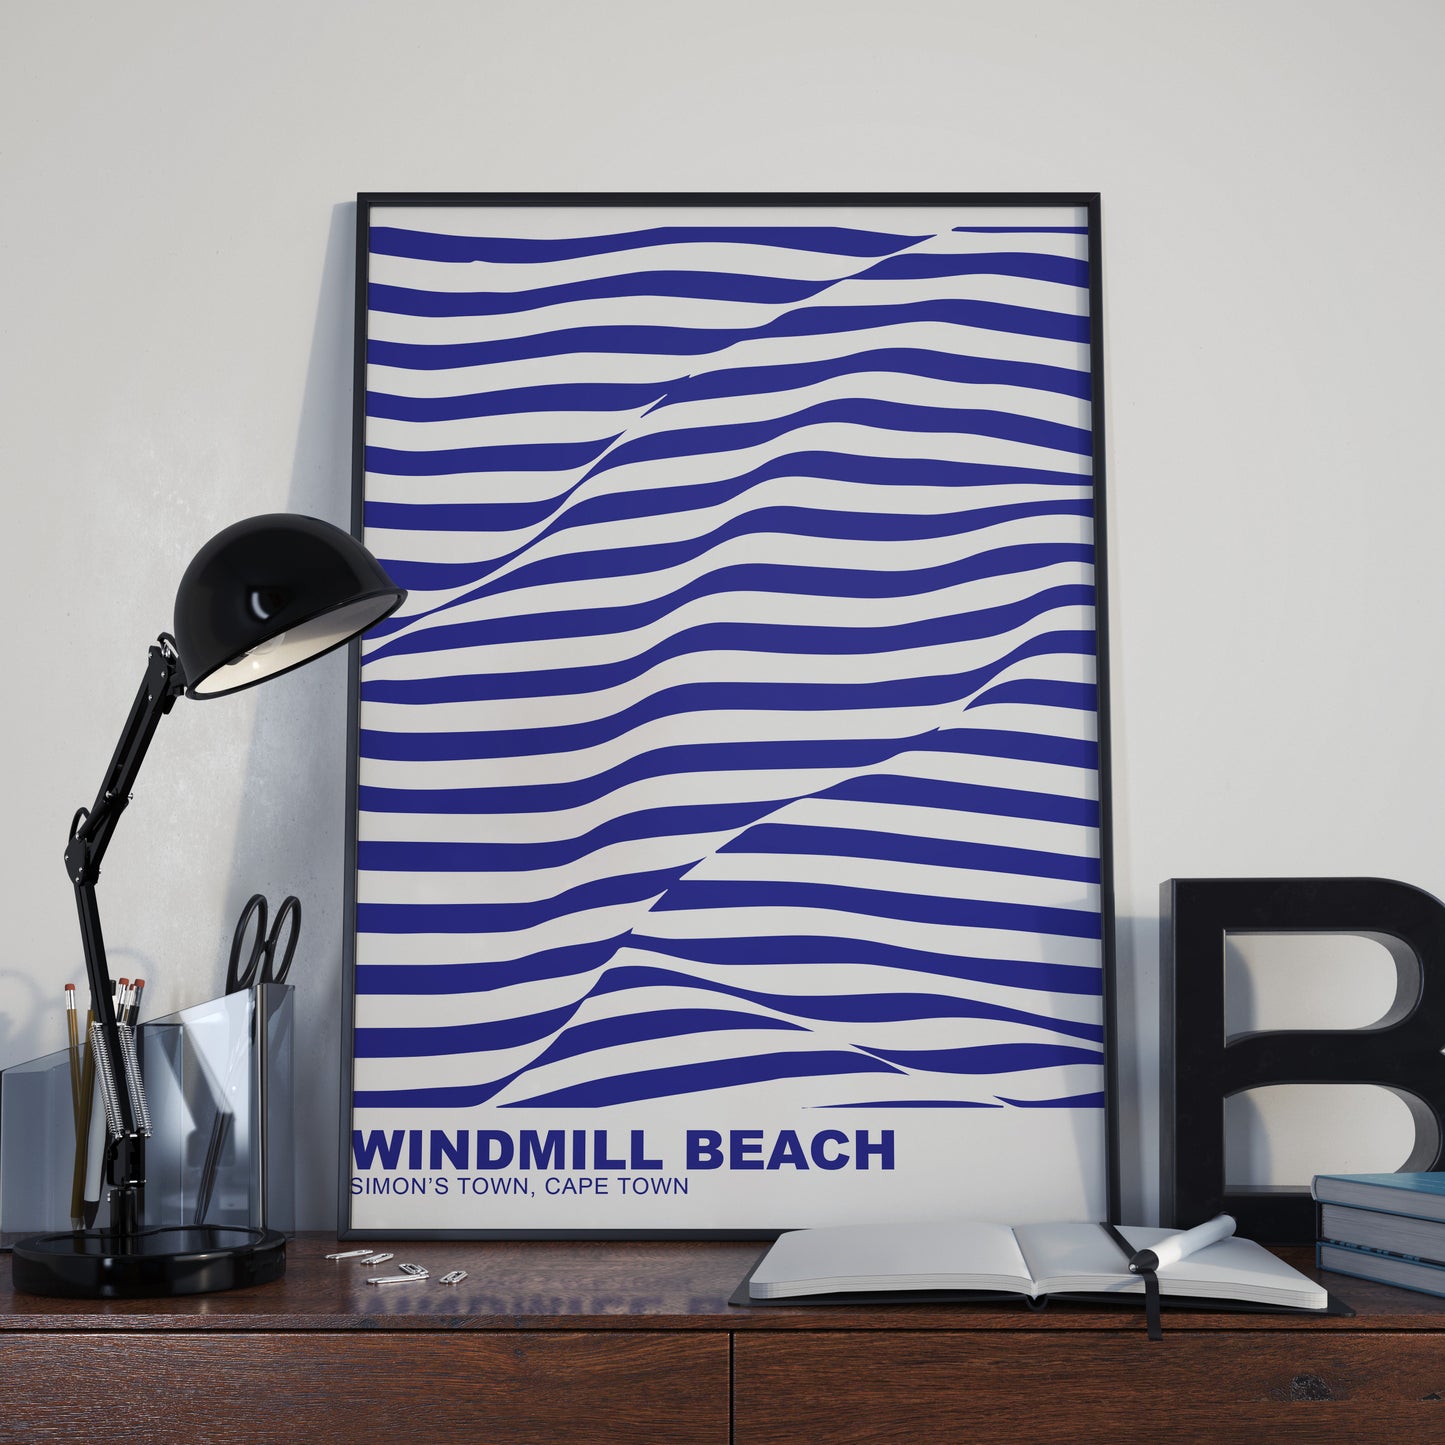 Windmill Beach